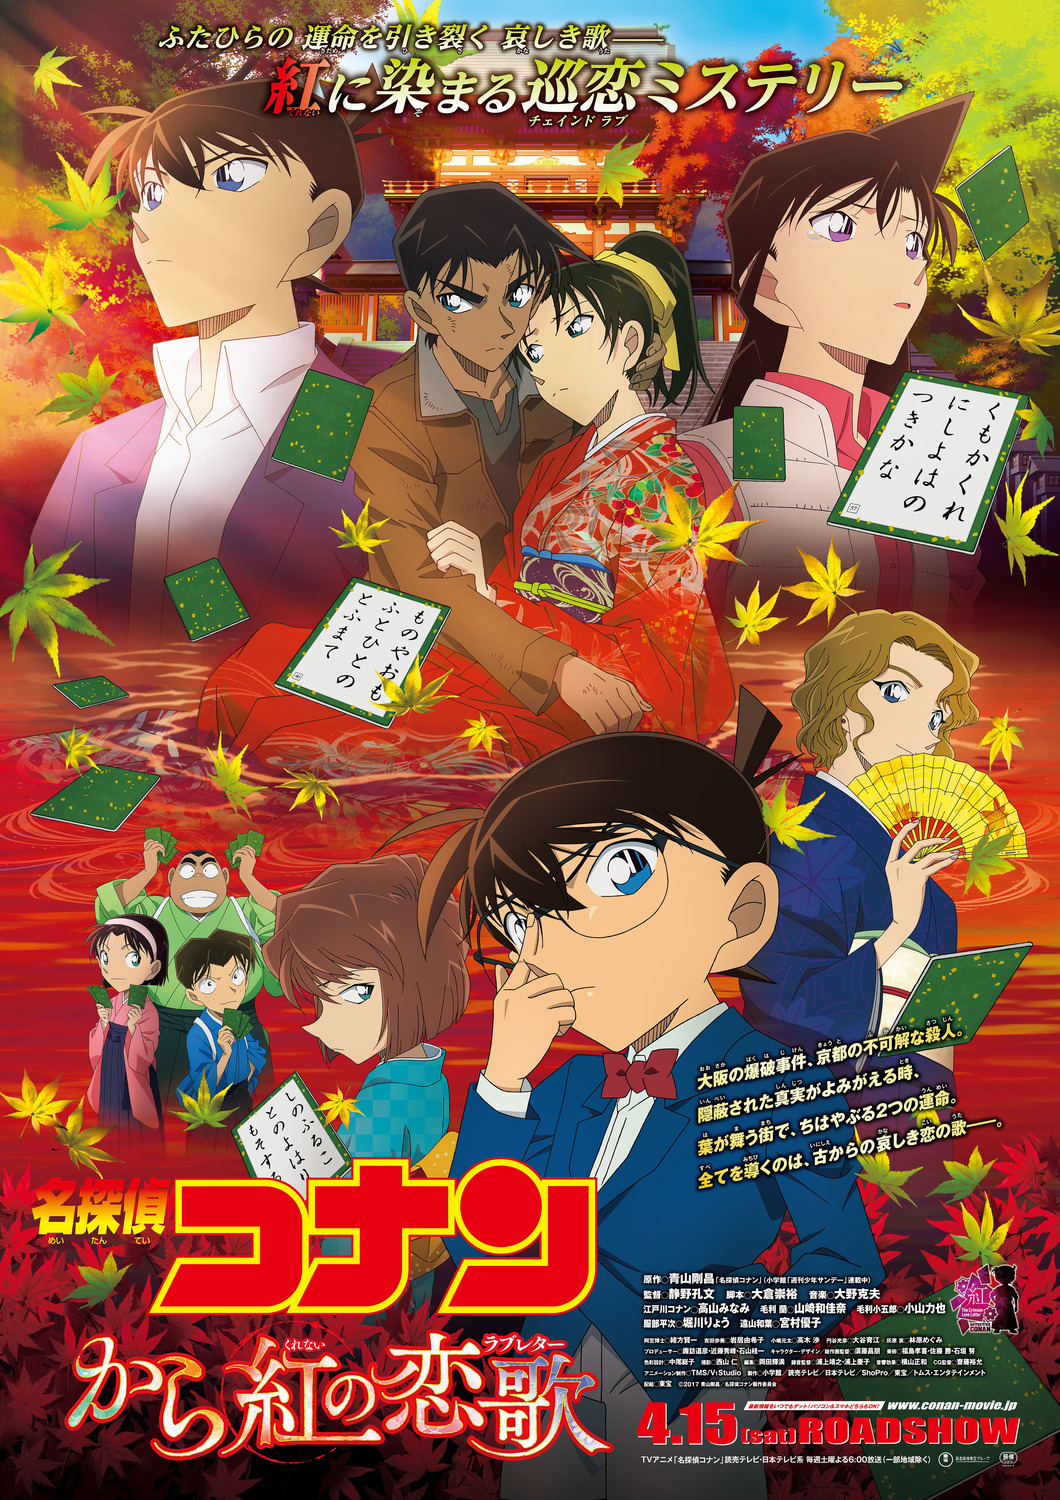 Extra Large Movie Poster Image for Meitantei Conan: Karakurenai no raburetâ 